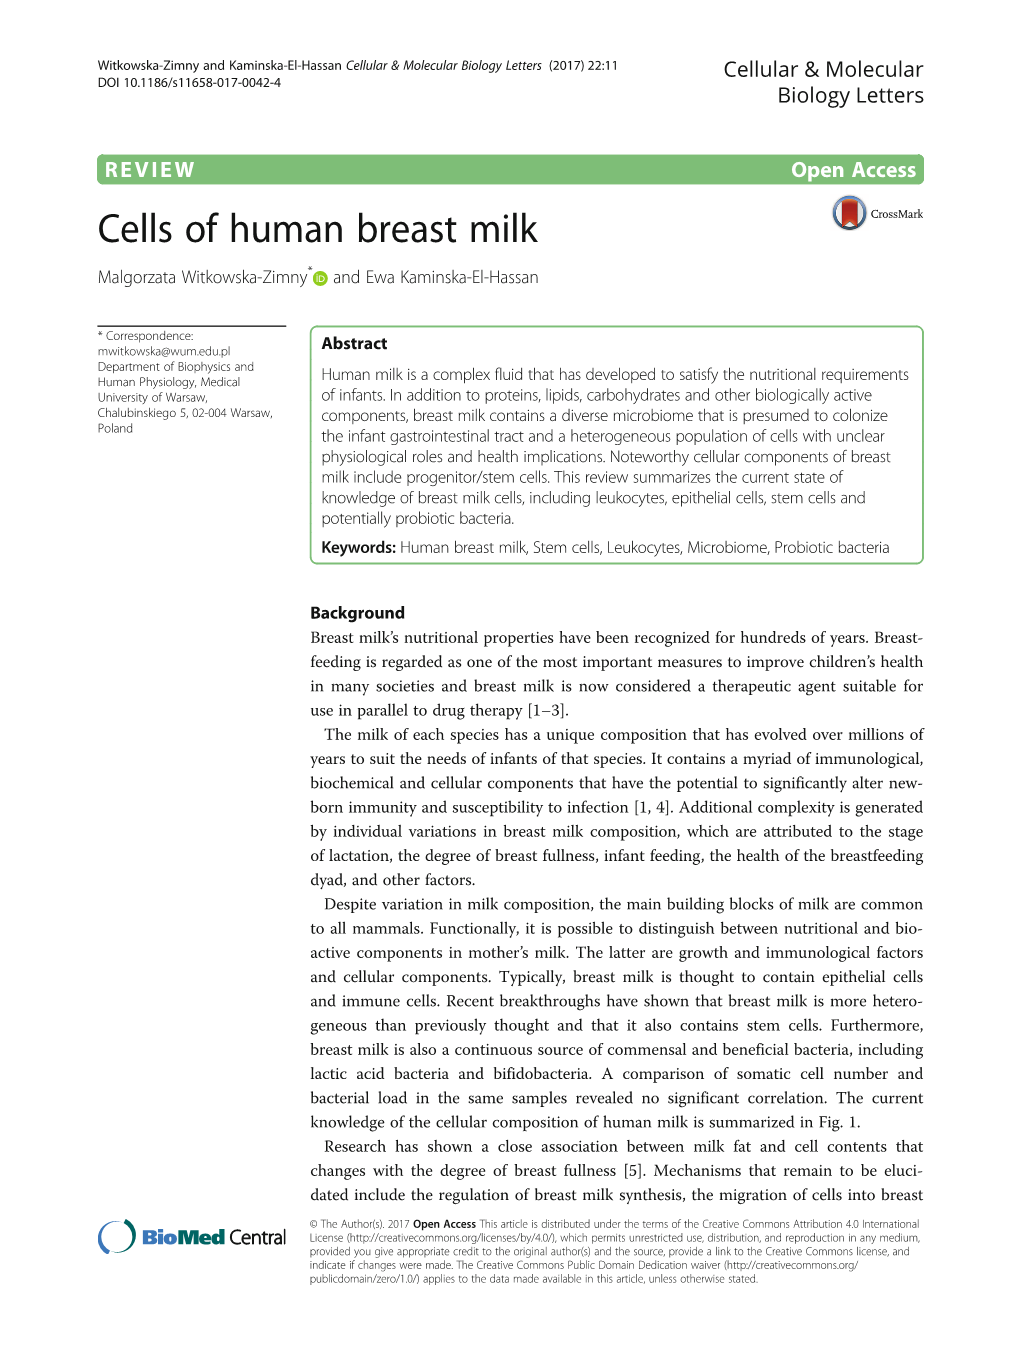 Cells of Human Breast Milk Malgorzata Witkowska-Zimny* and Ewa Kaminska-El-Hassan